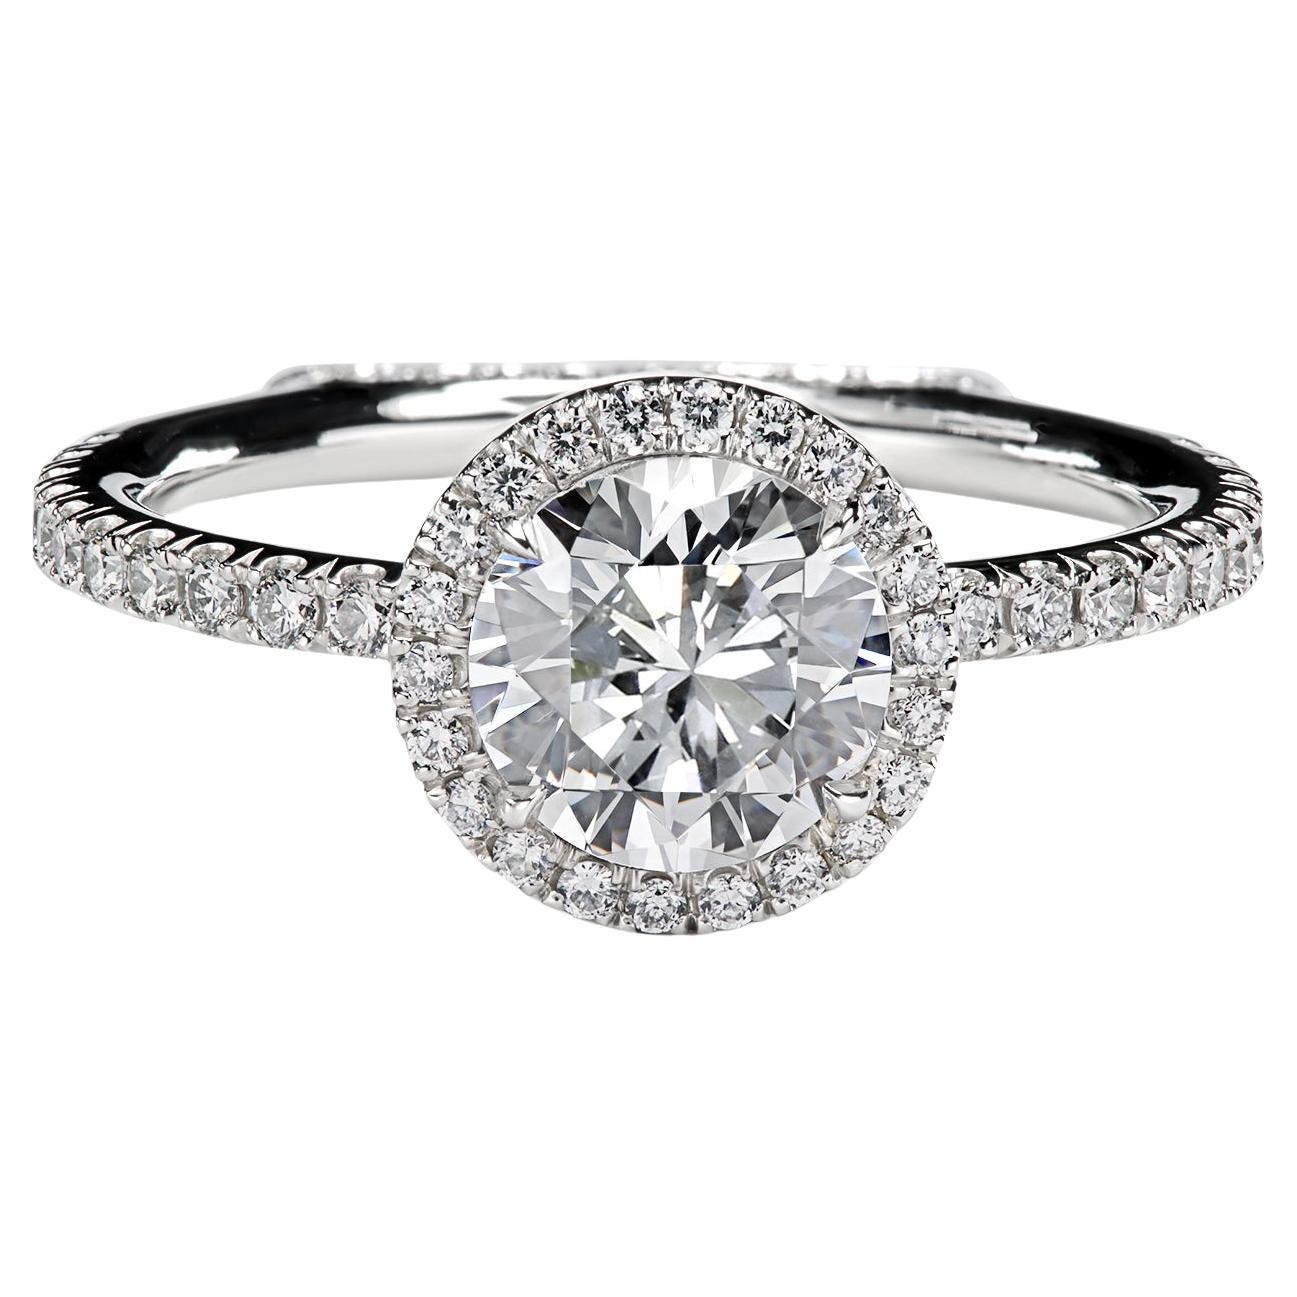 Leon Mege "Jesolo" platinum halo engagement ring with natural round diamond